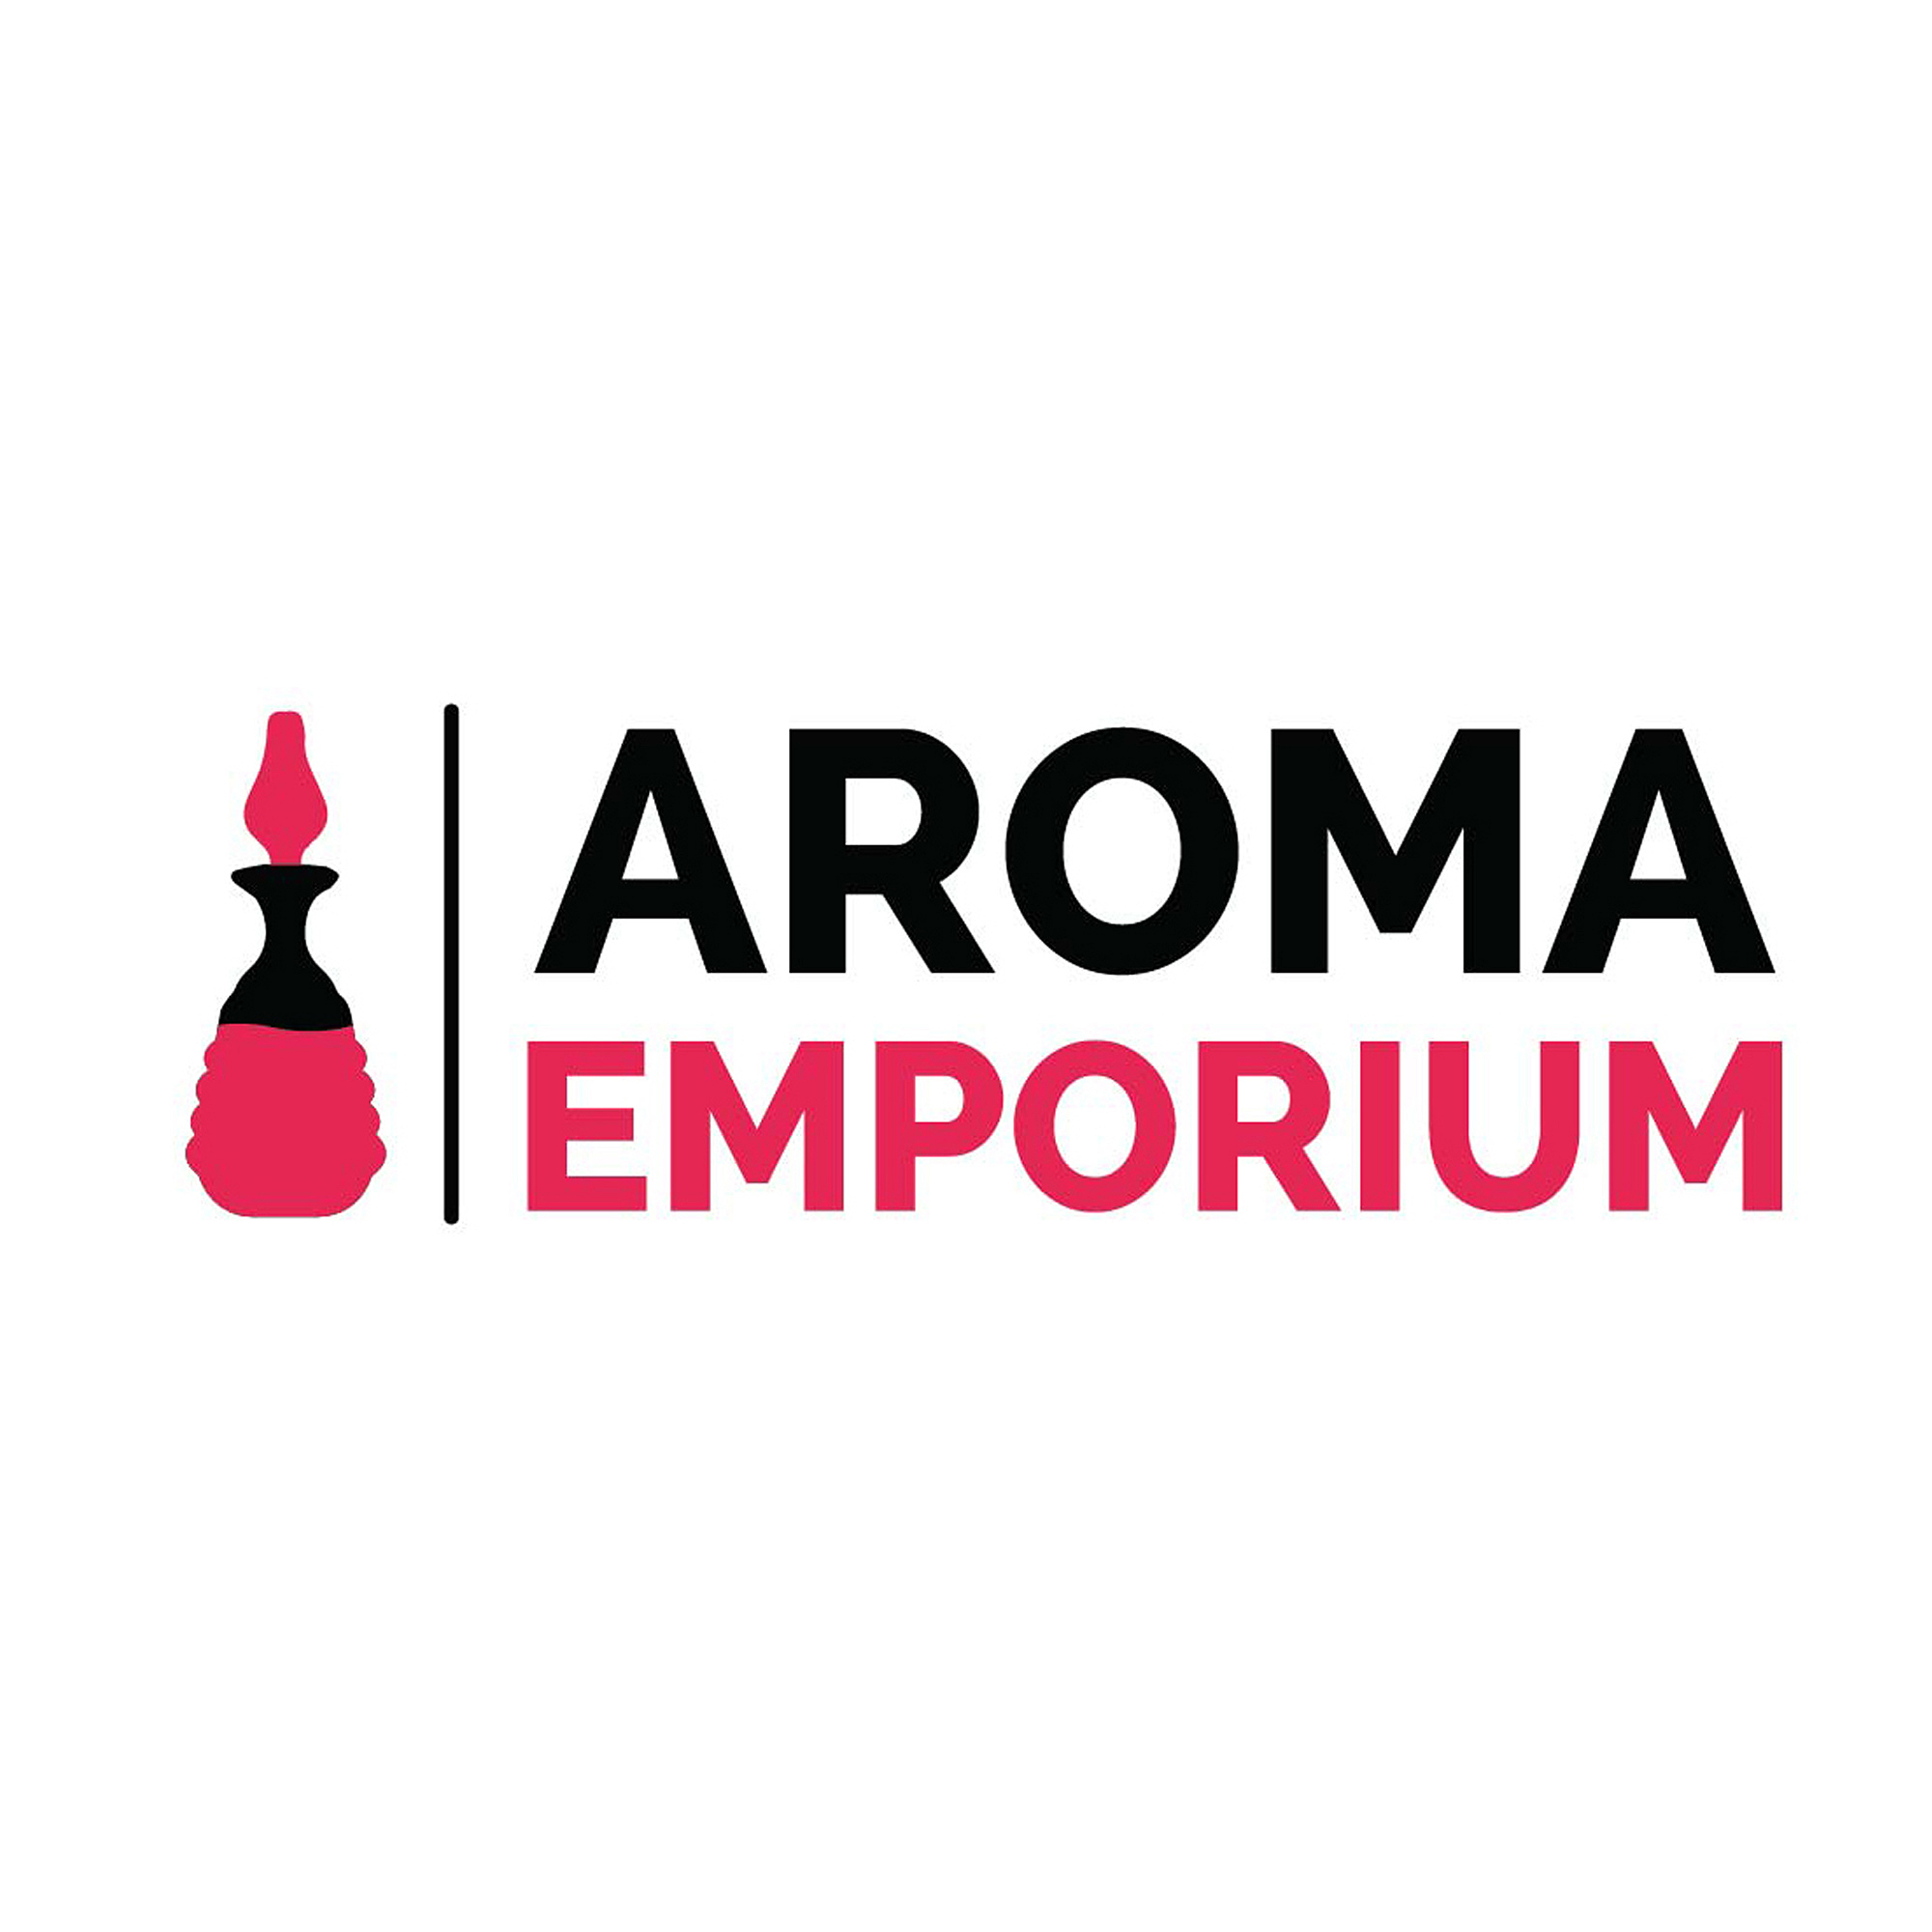 //winnerswebdesign.com/wp-content/uploads/2021/05/aromaemporium-logo-large.jpg